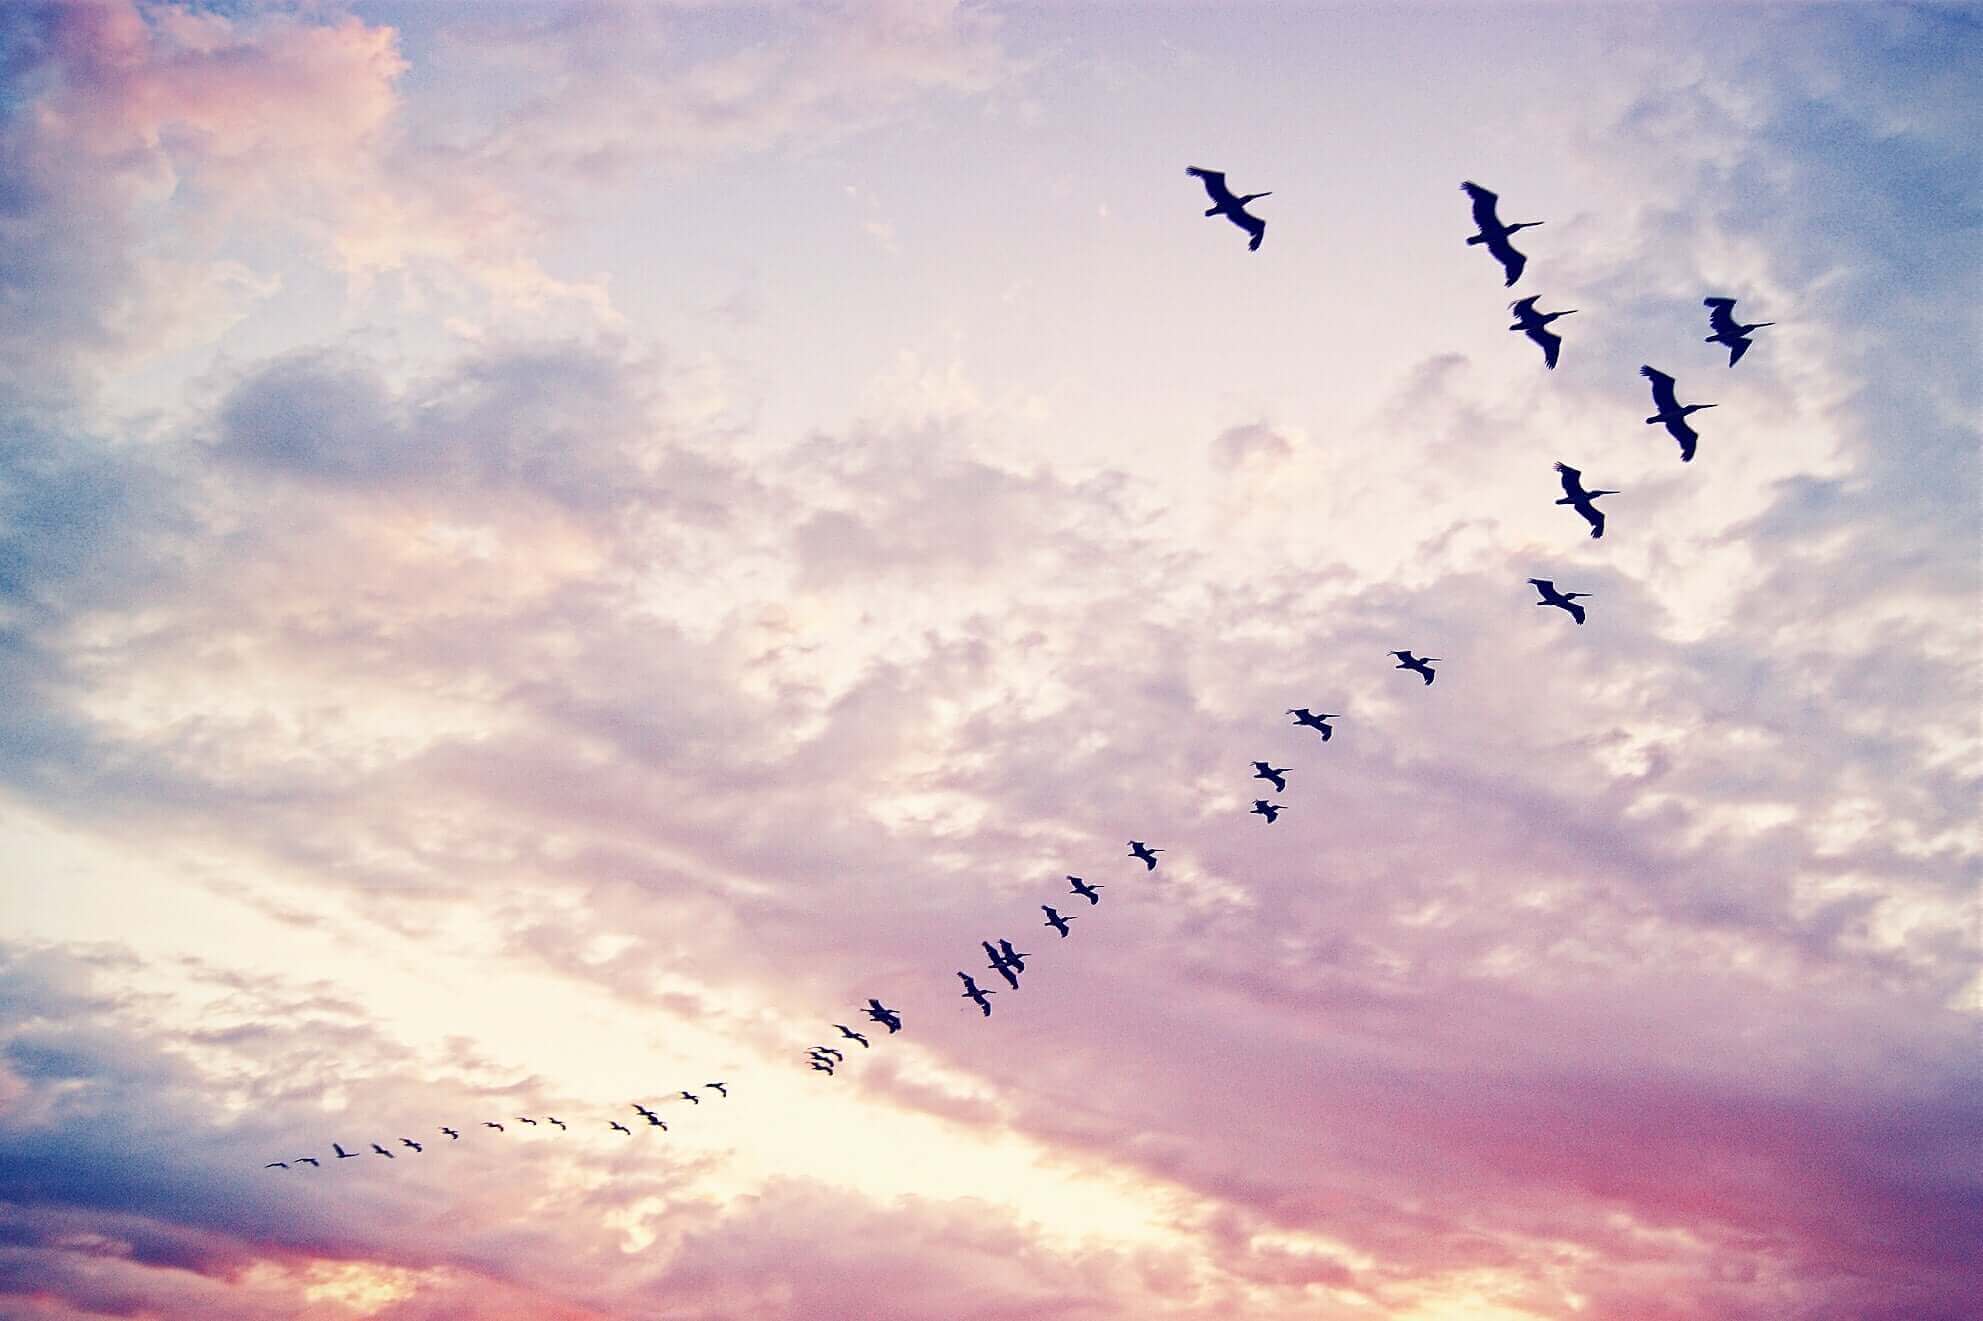 sky with flock of birds